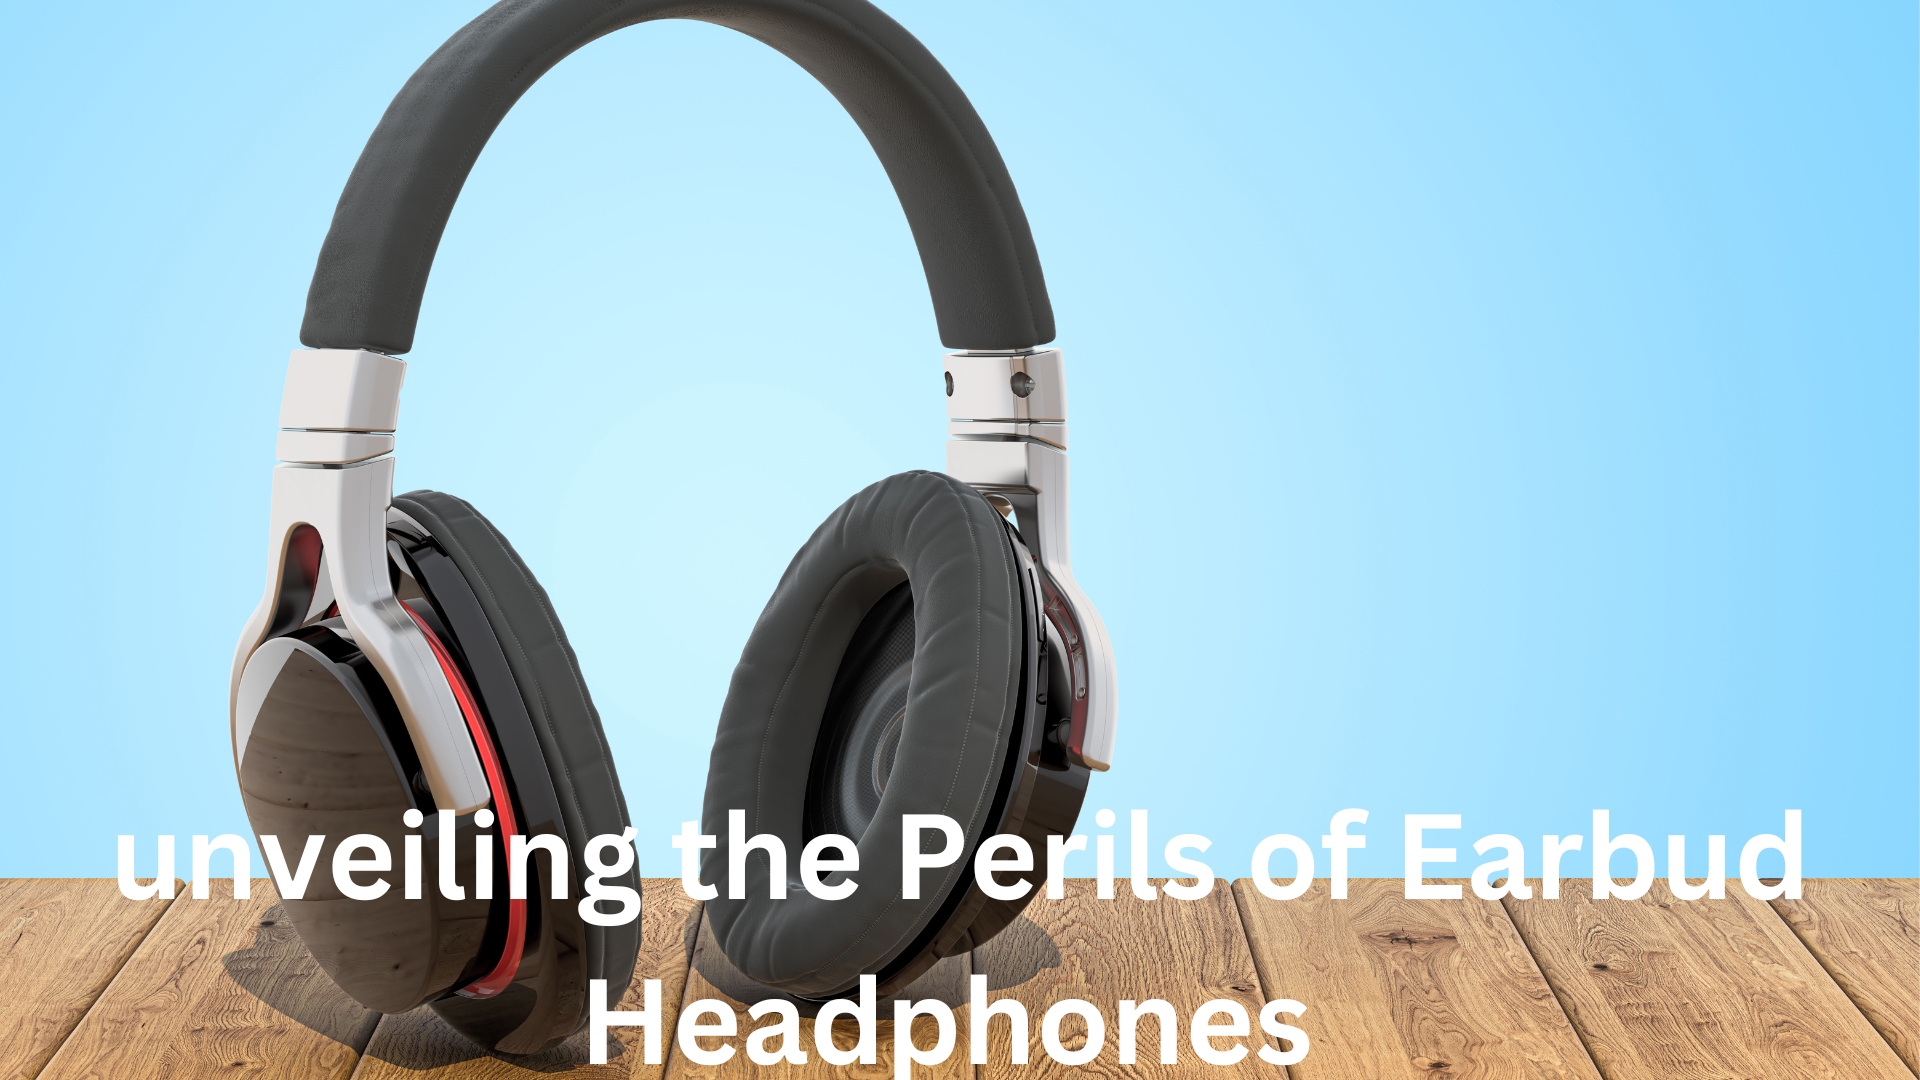 unveiling the Perils of Earbud Headphones heading